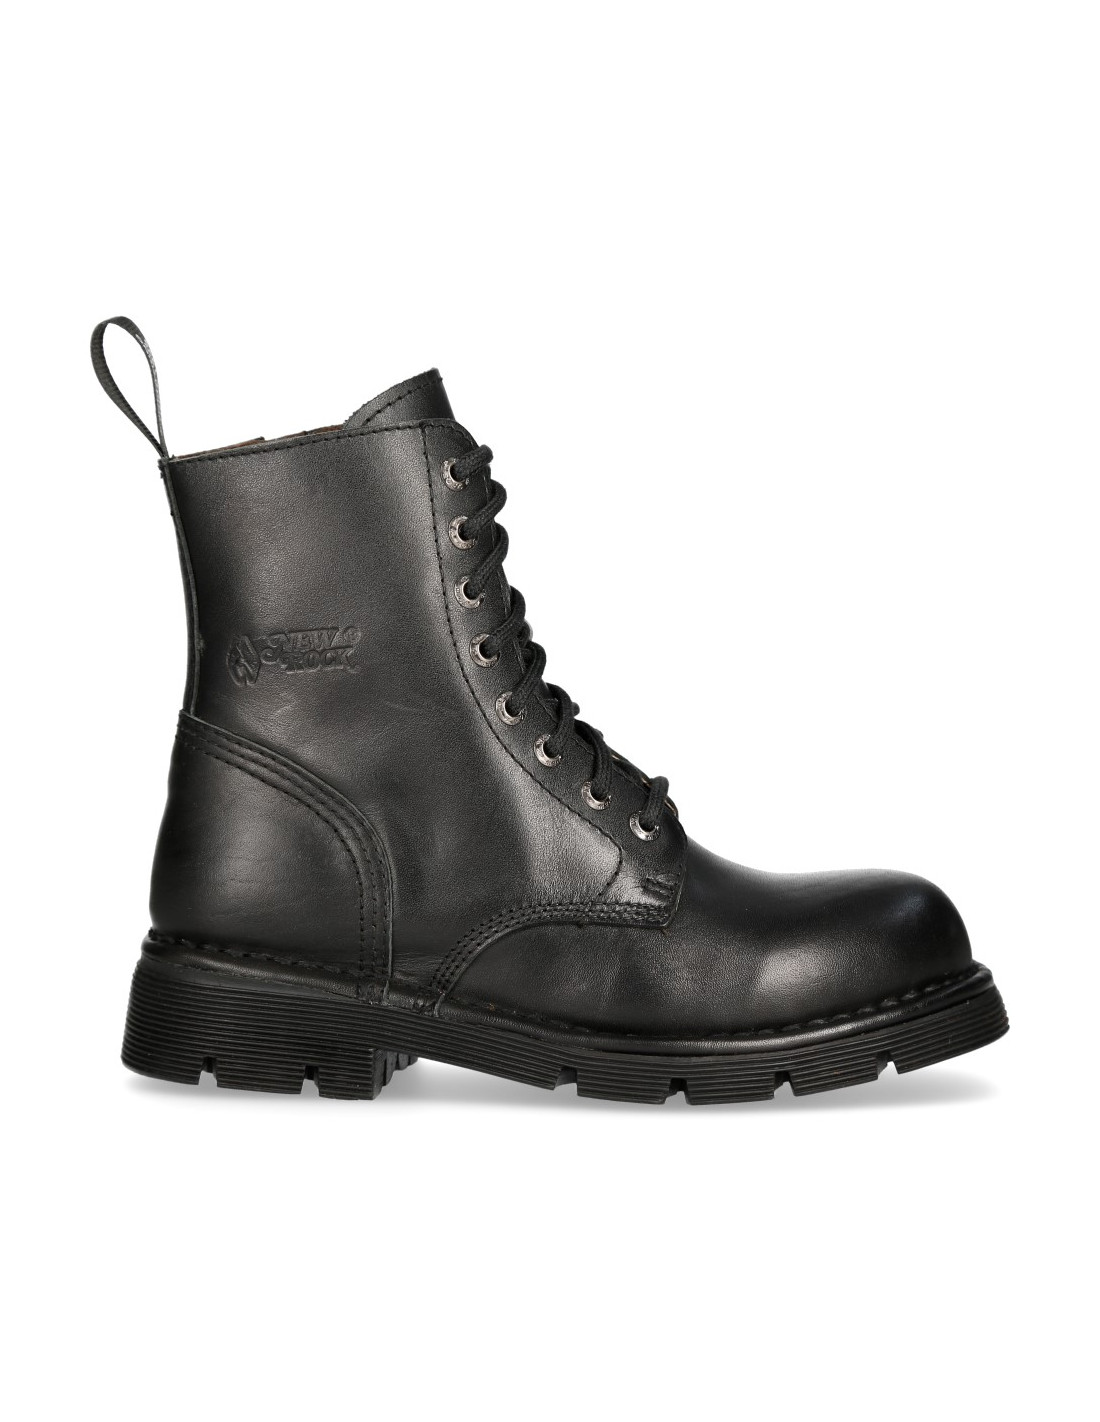 New Rock M.NEWMILI084-S1 Black Gothic Boots Military Unisex 8 Eyelet Shoes 